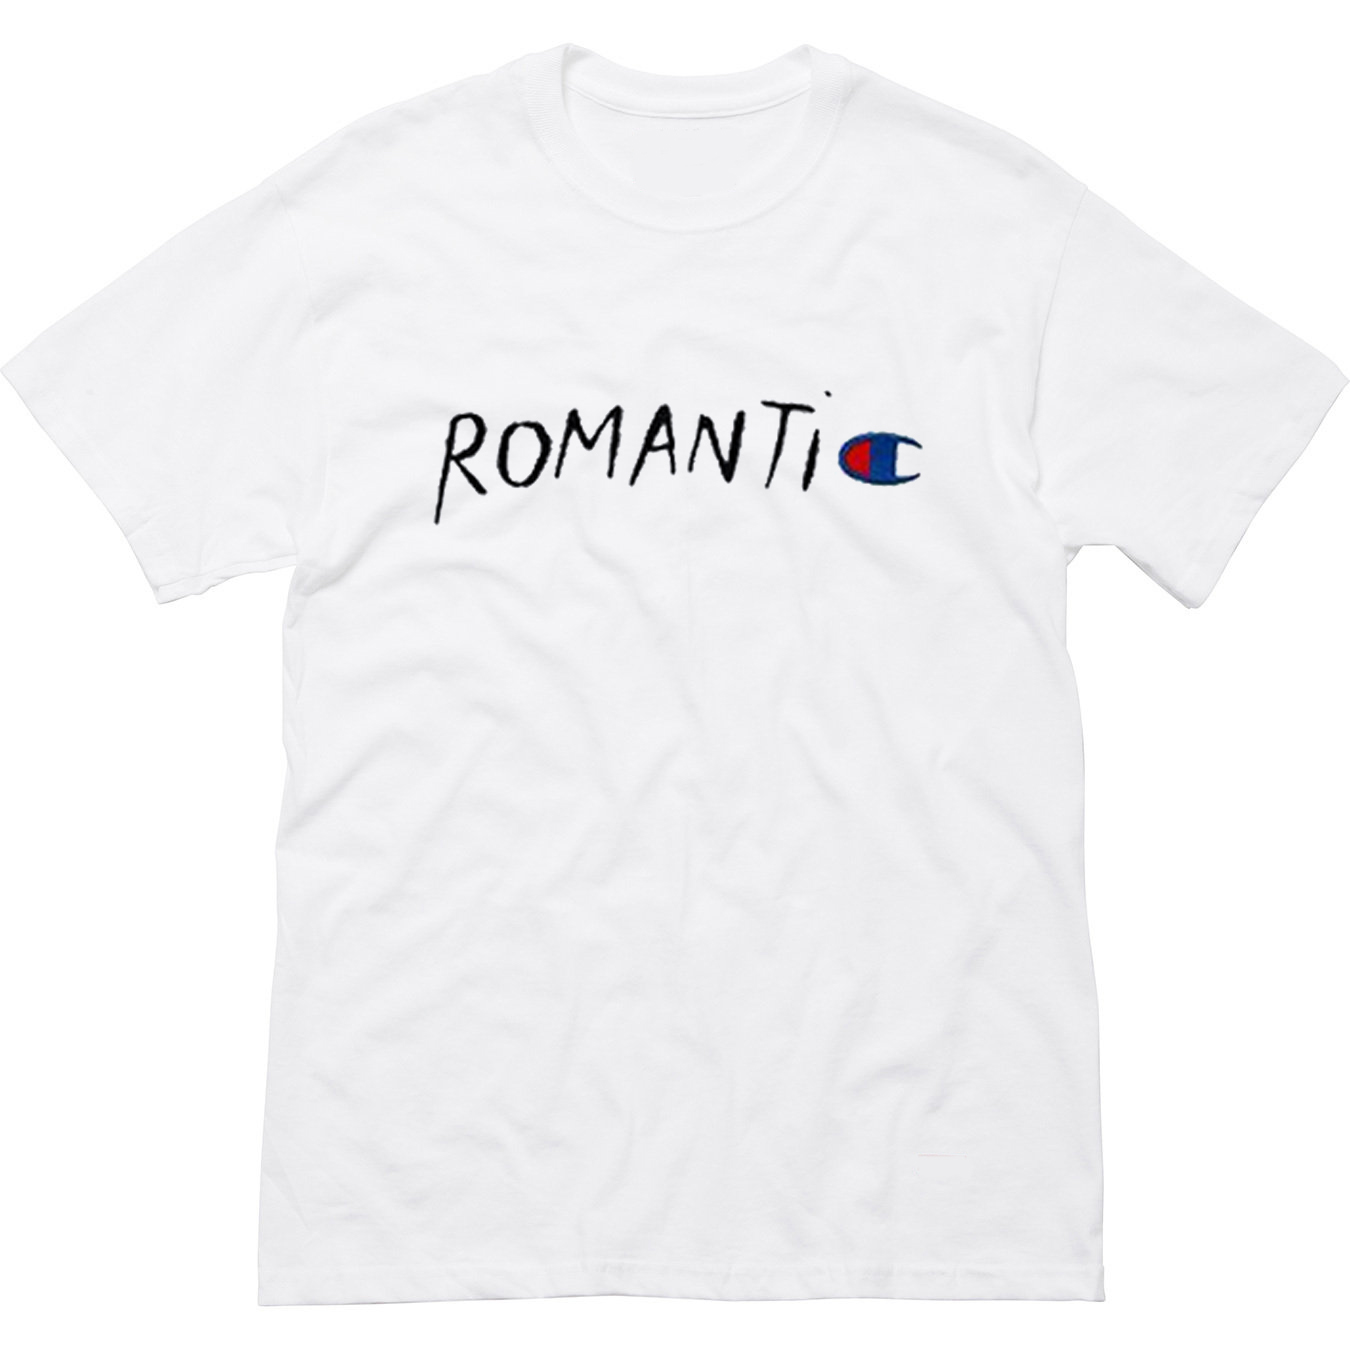 århundrede Ekspression bund Romantic Champion Parody T-shirt